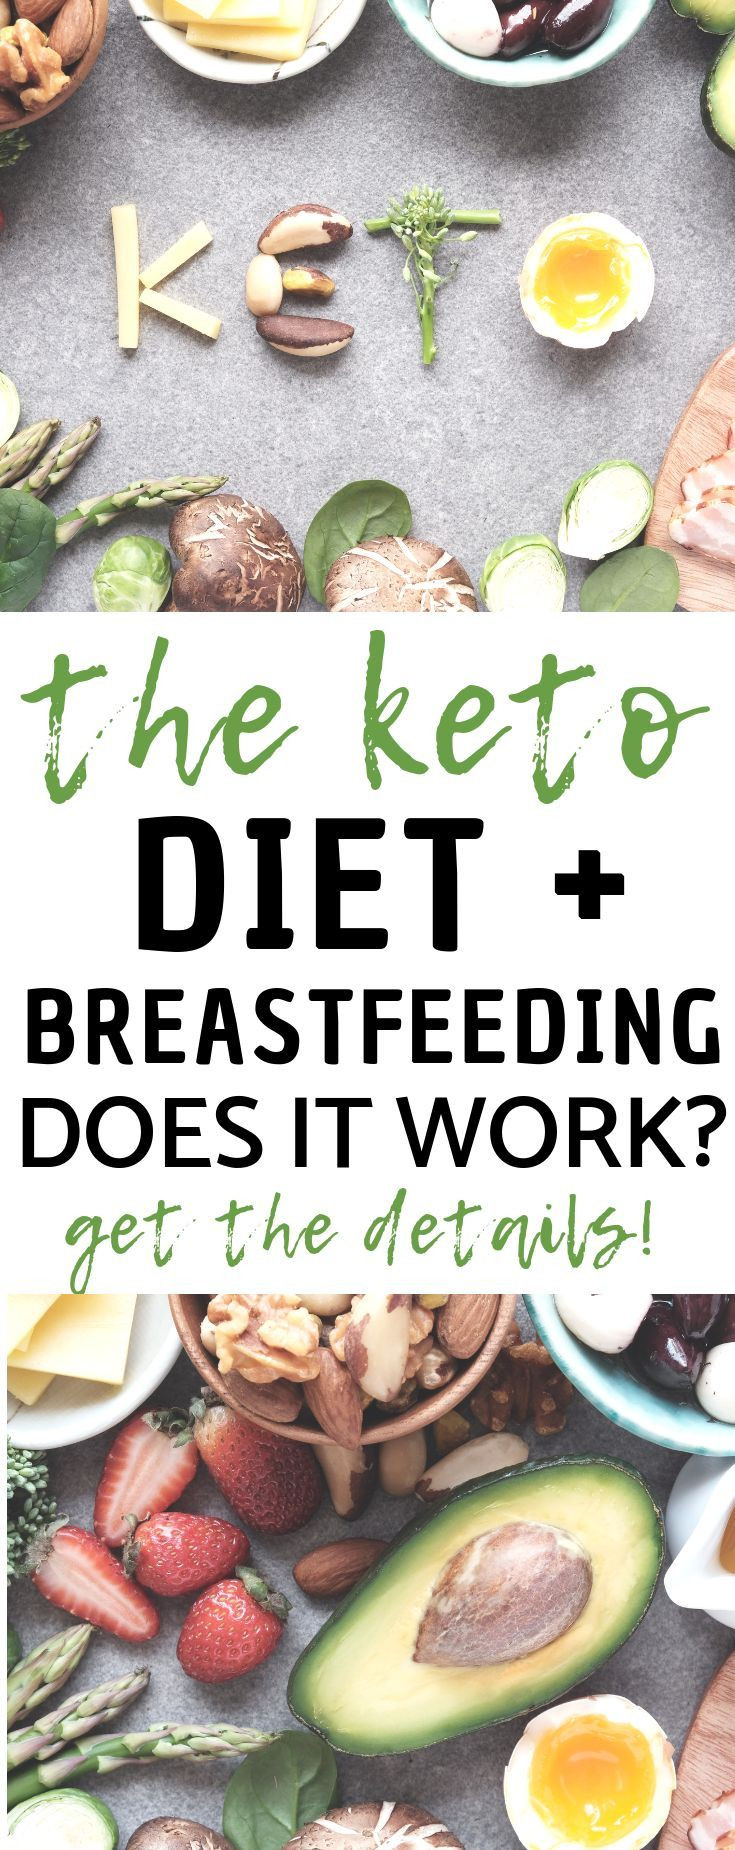 Keto Diet Breastfeeding
 Should You Follow The Keto Diet While Breastfeeding